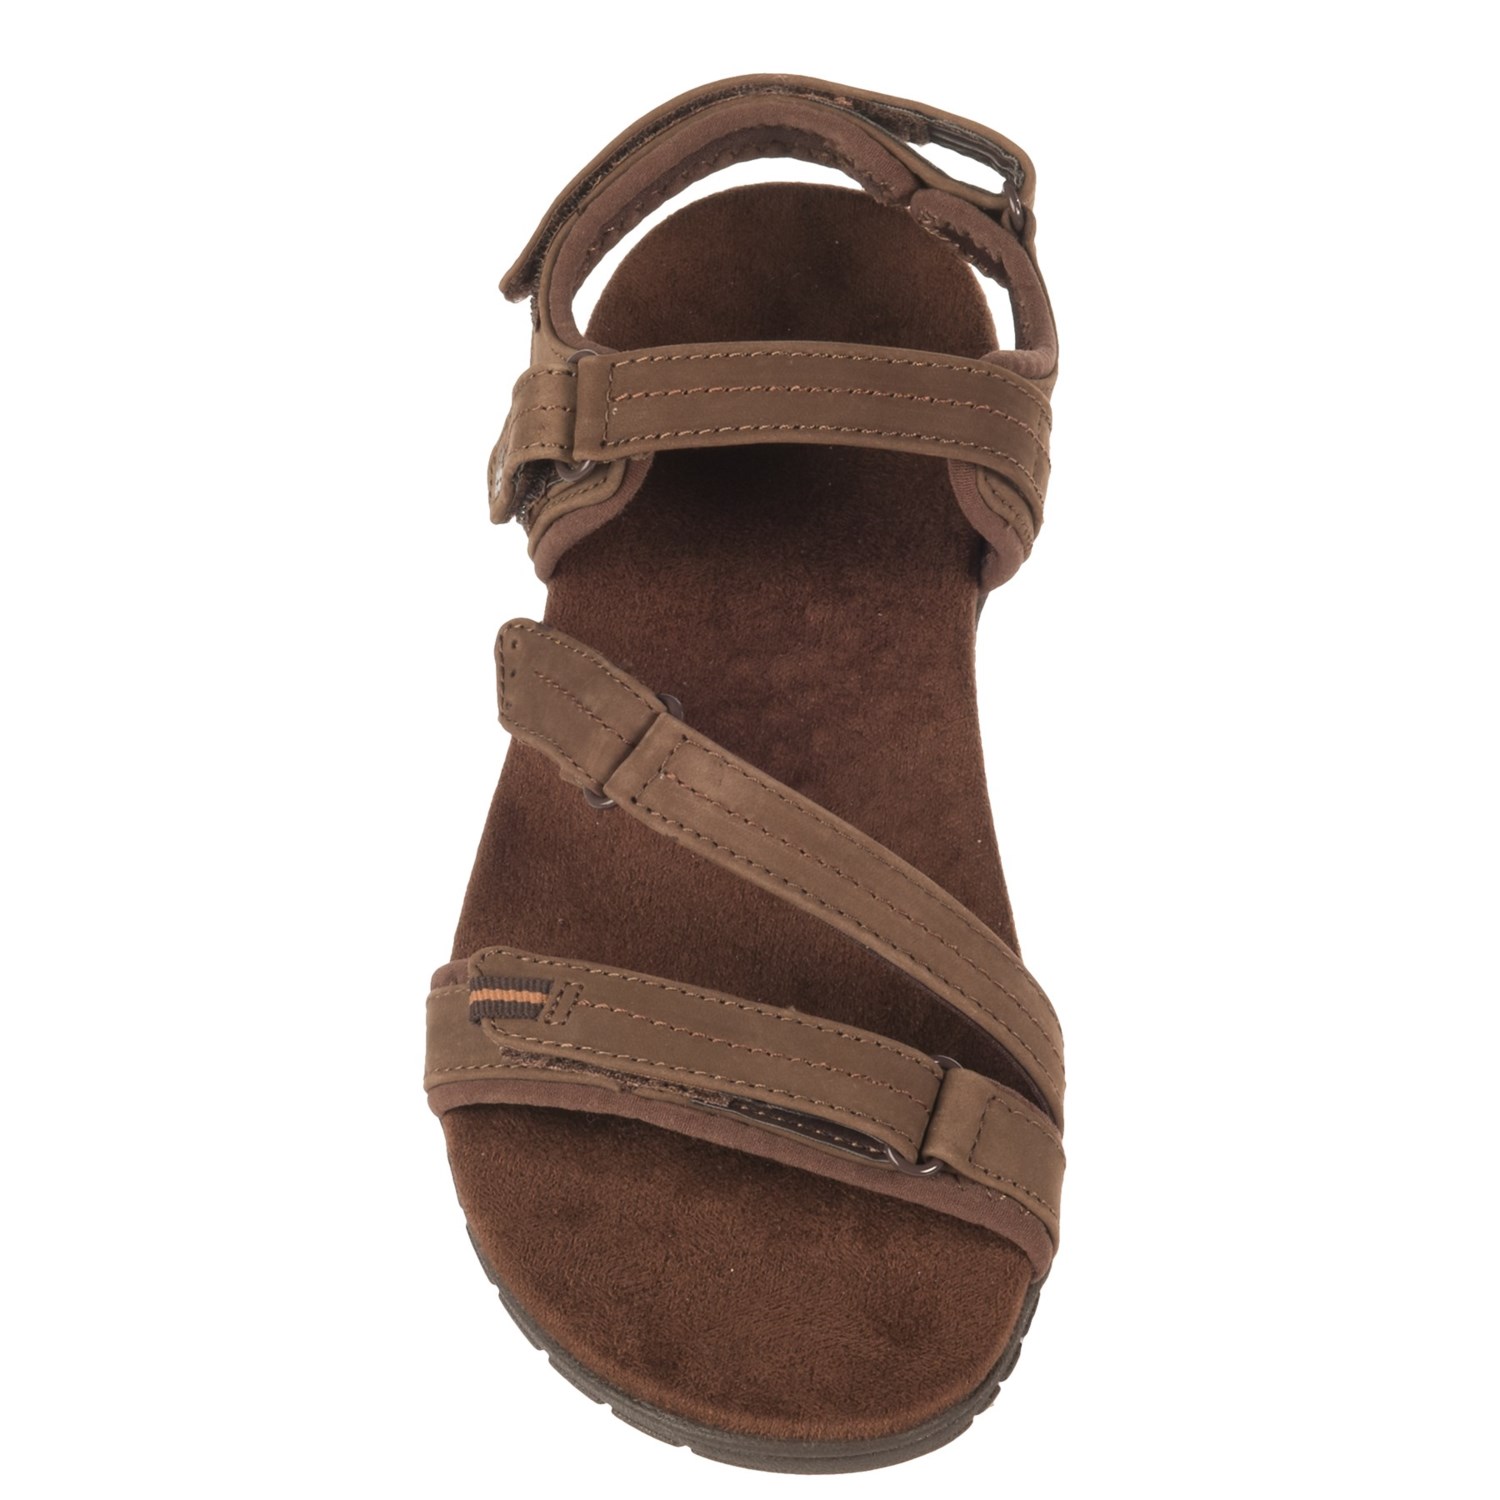 New Balance Maya Sport Sandals (For Women) - Save 59%